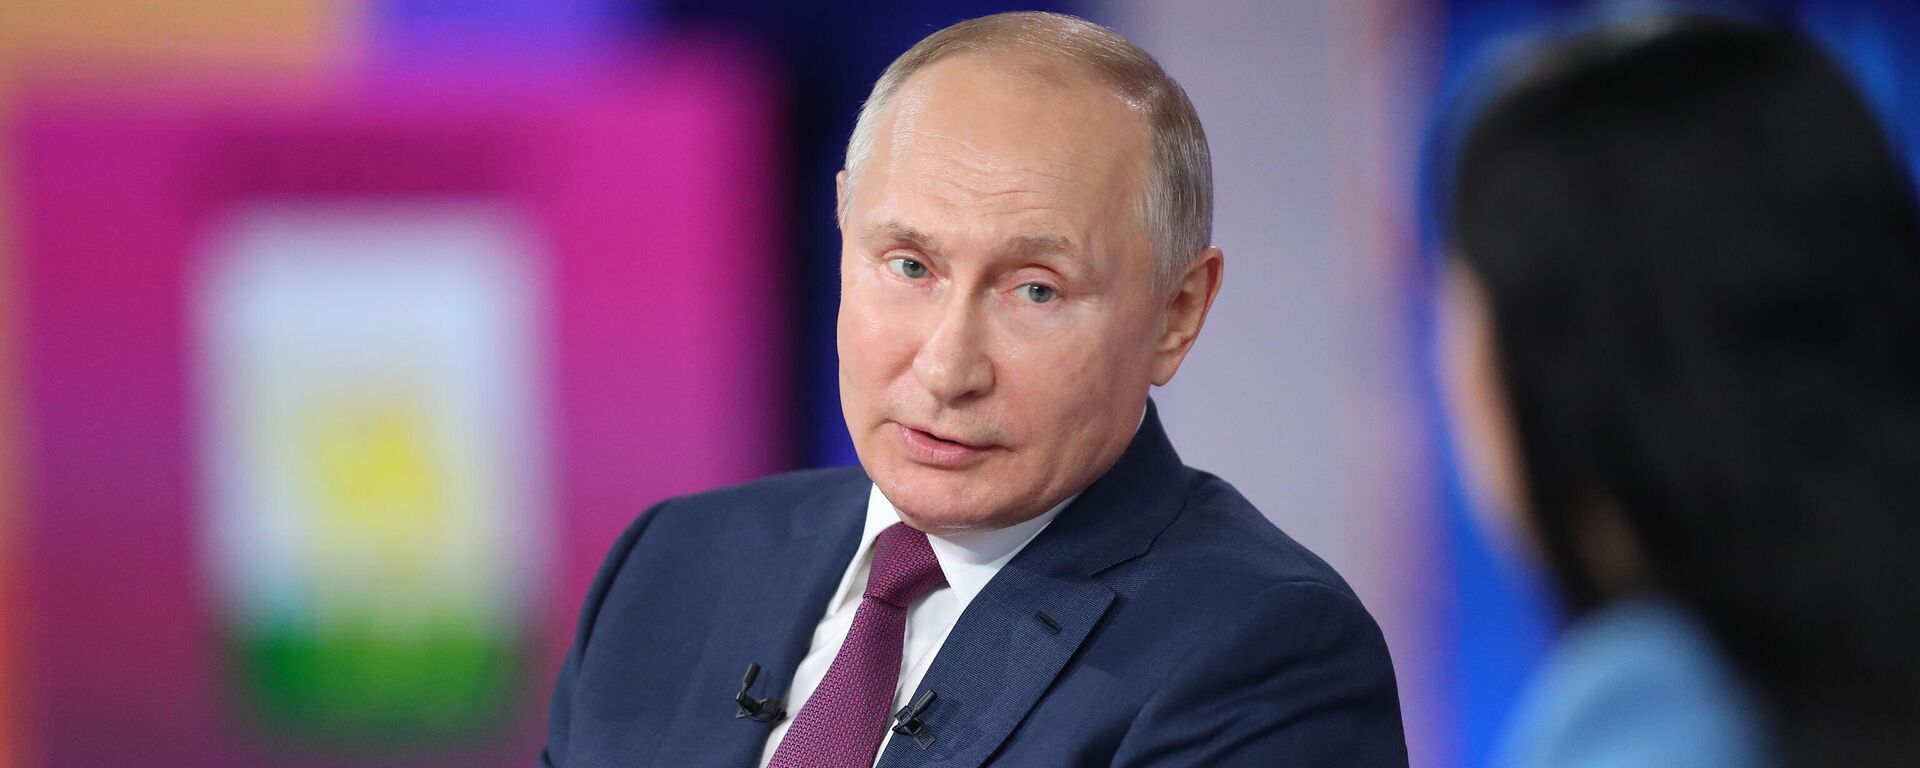 Vladímir Putin, presidente de Rusia - Sputnik Mundo, 1920, 04.07.2021